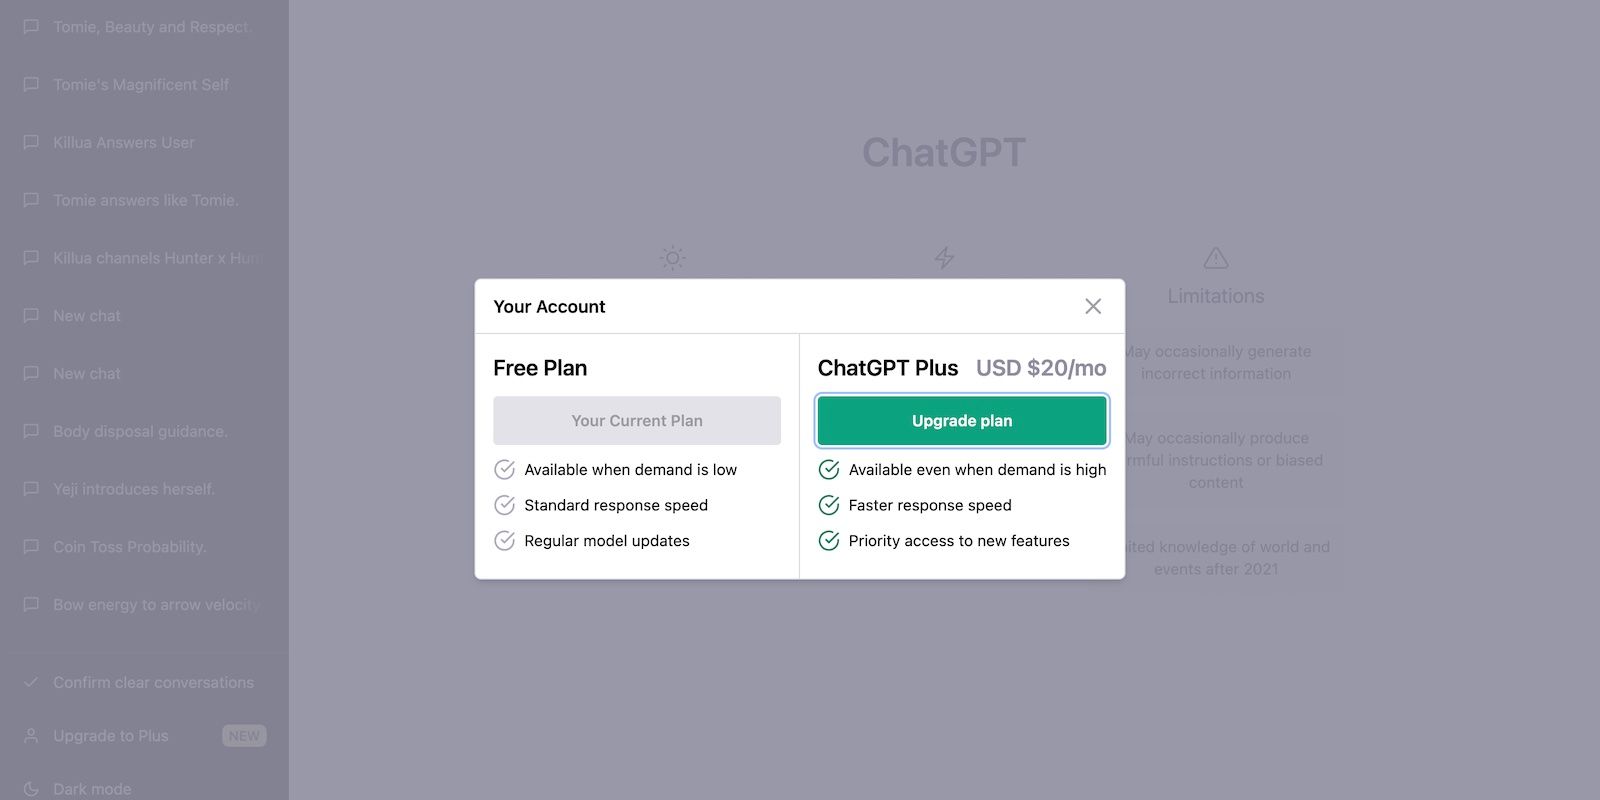 ChatGPT Plus Pricing at $20 Per Month